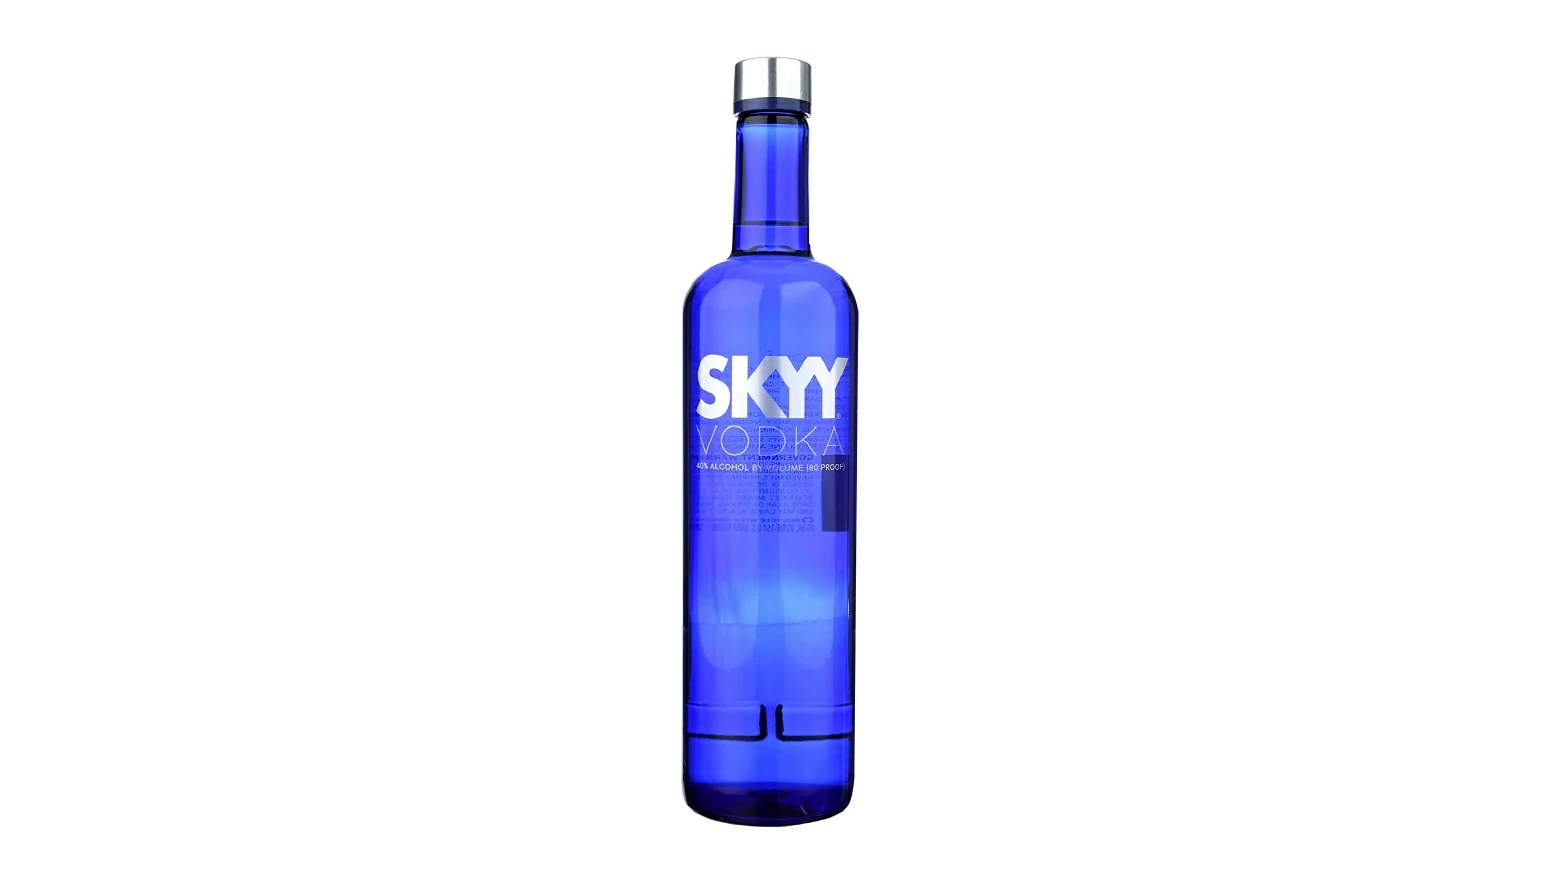 Botella de Vodka SKYY